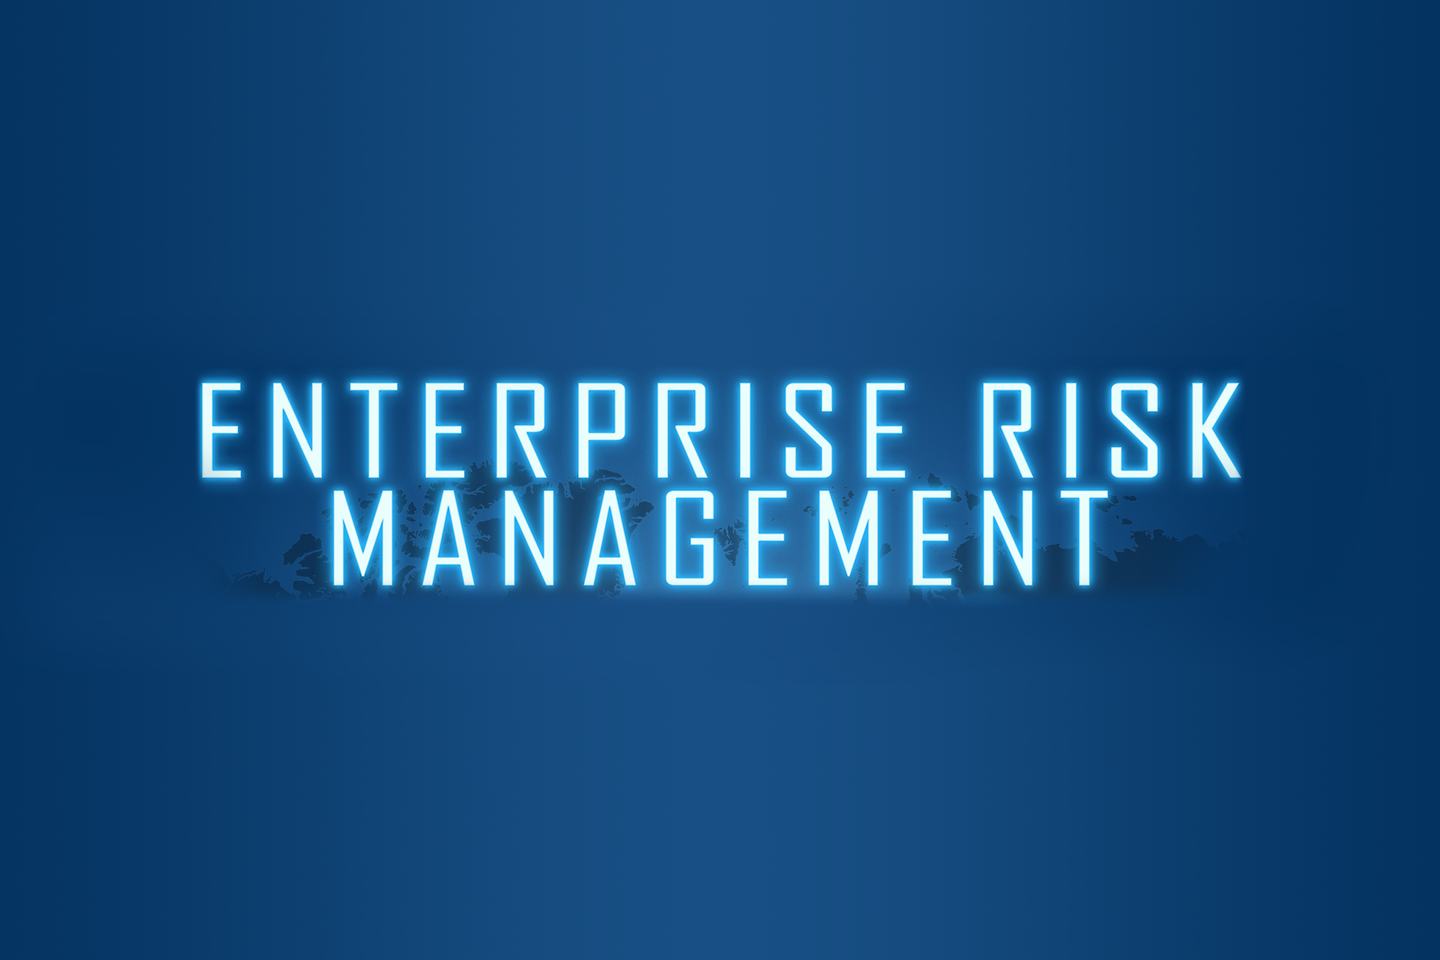 Enterprise Risk Management escrito sobre un fondo azul con el mapamundi